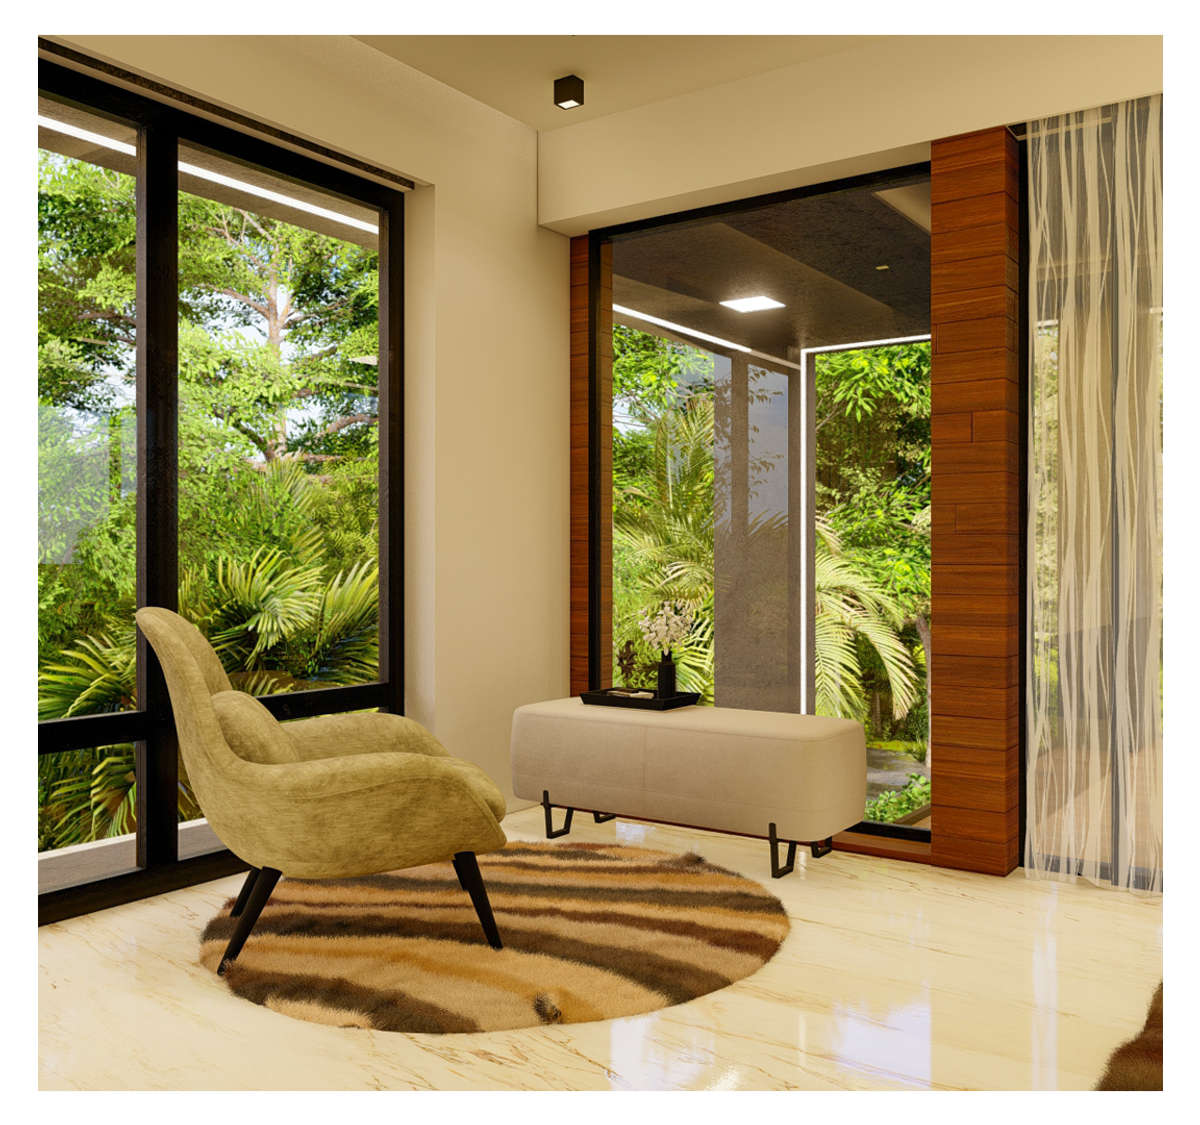 Interior Design - Master Bedroom

Design for Jai Properties, Kollam

 #Kollam #Kerala #ElevationHome #ElevationDesign #3dhouse #3D_ELEVATION #HouseDesigns #Architect #spatialux #spatialuxdesigns #ContemporaryHouse #ContemporaryDesigns #modernhome #moderndesign #architecturedesigns #architecture #MasterBedroom #BedroomDecor #KingsizeBedroom #BedroomDesigns #luxuryinteriors